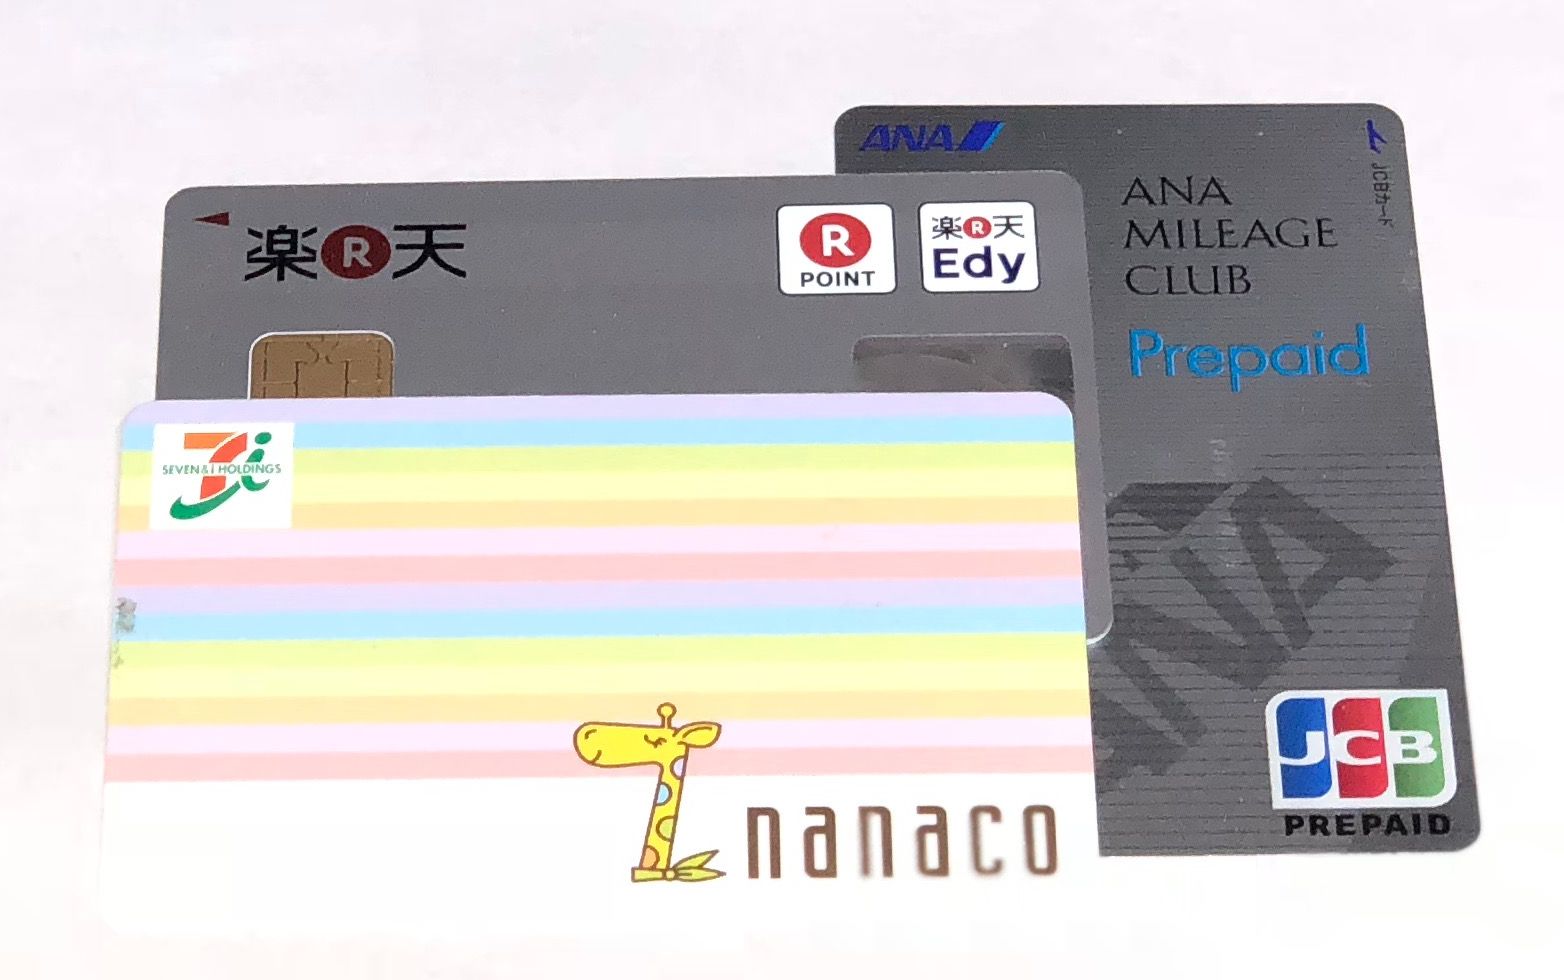 ANA JCBプリペイドカードを経由したnanacoチャージ